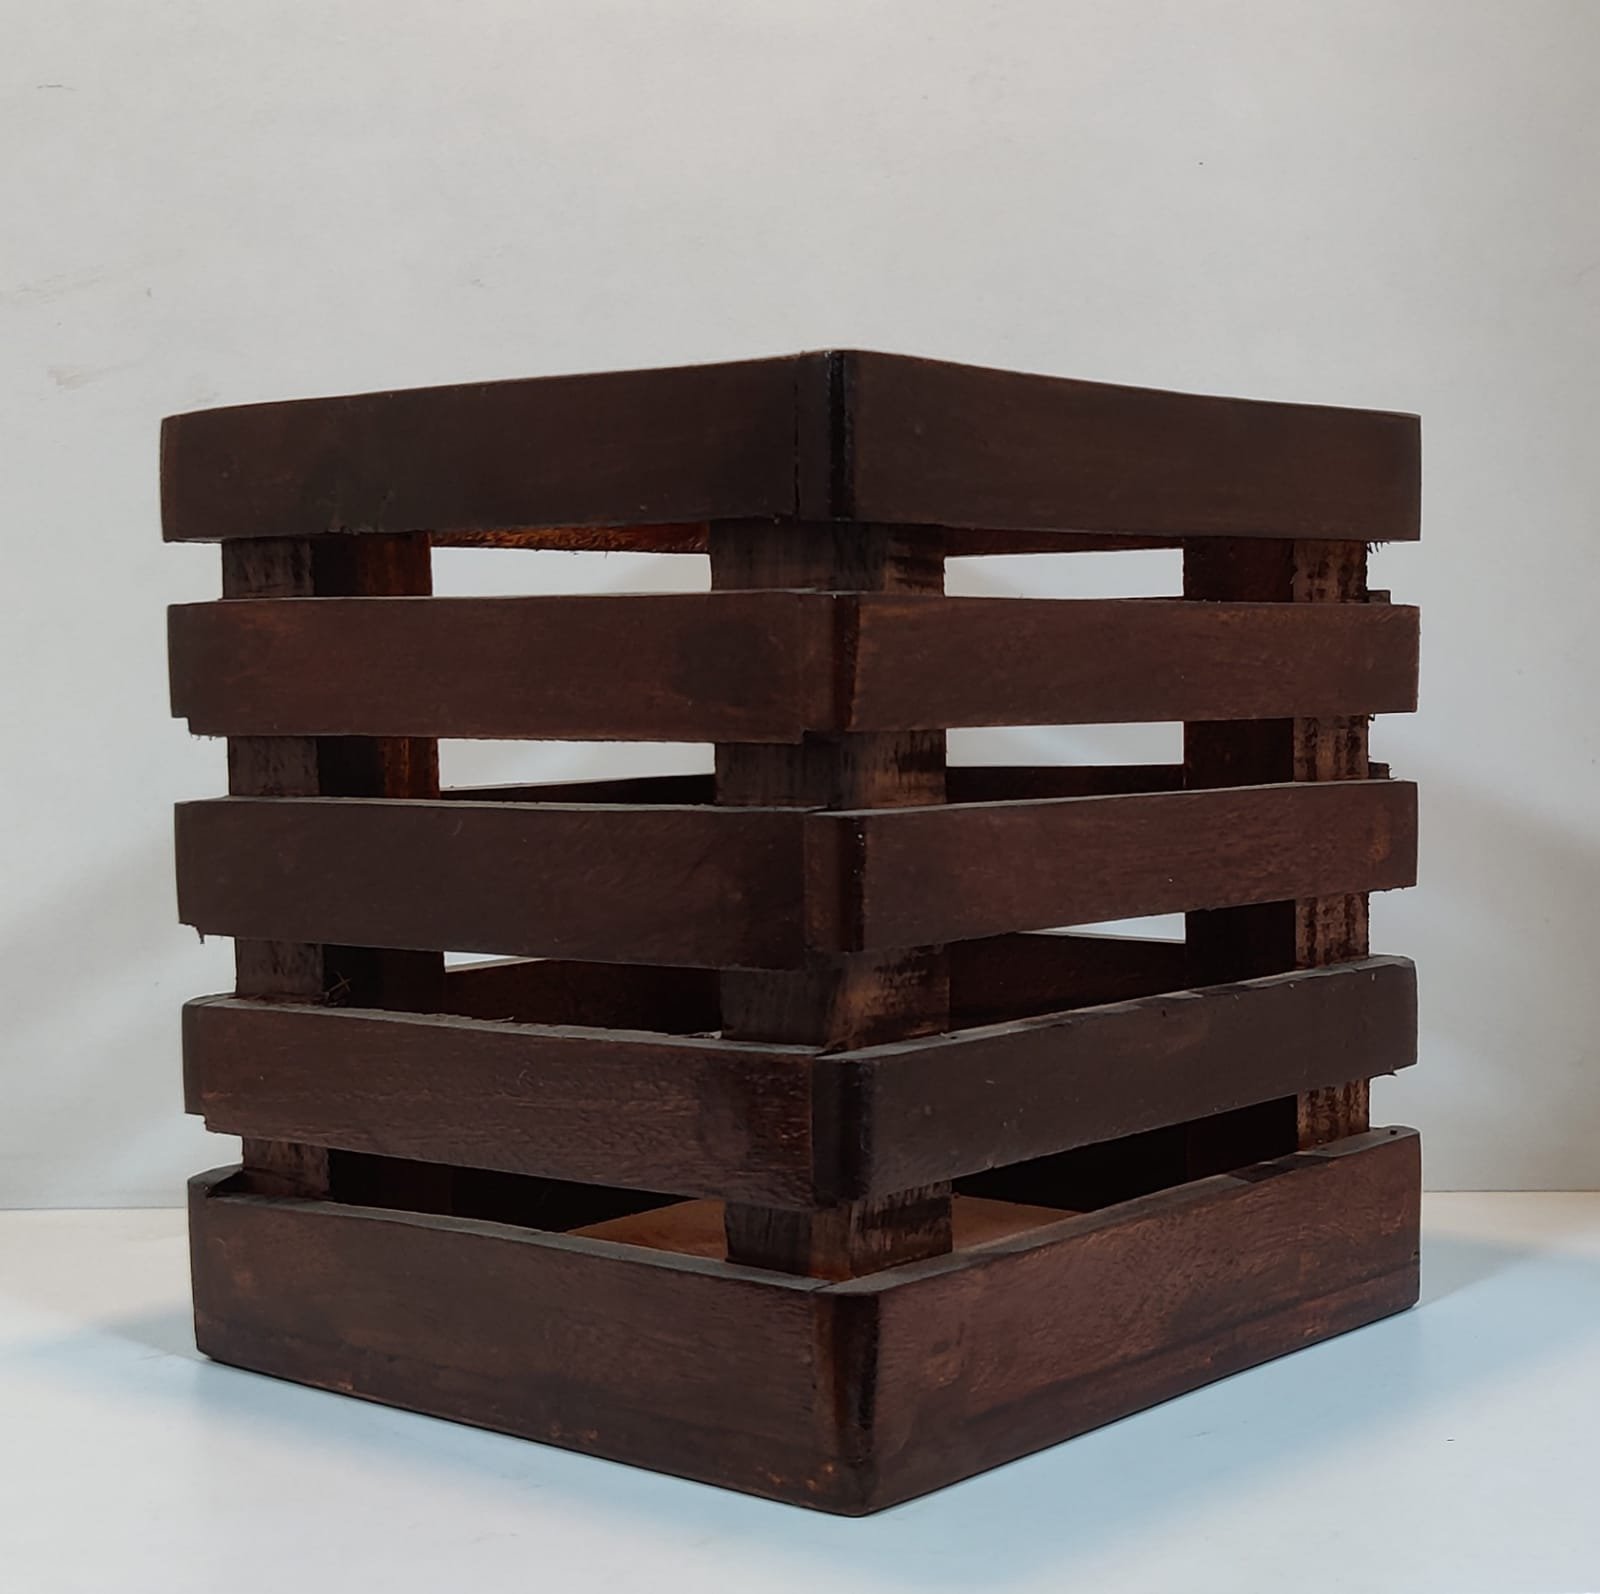 Wooden Decorative Storage Cube Boxes